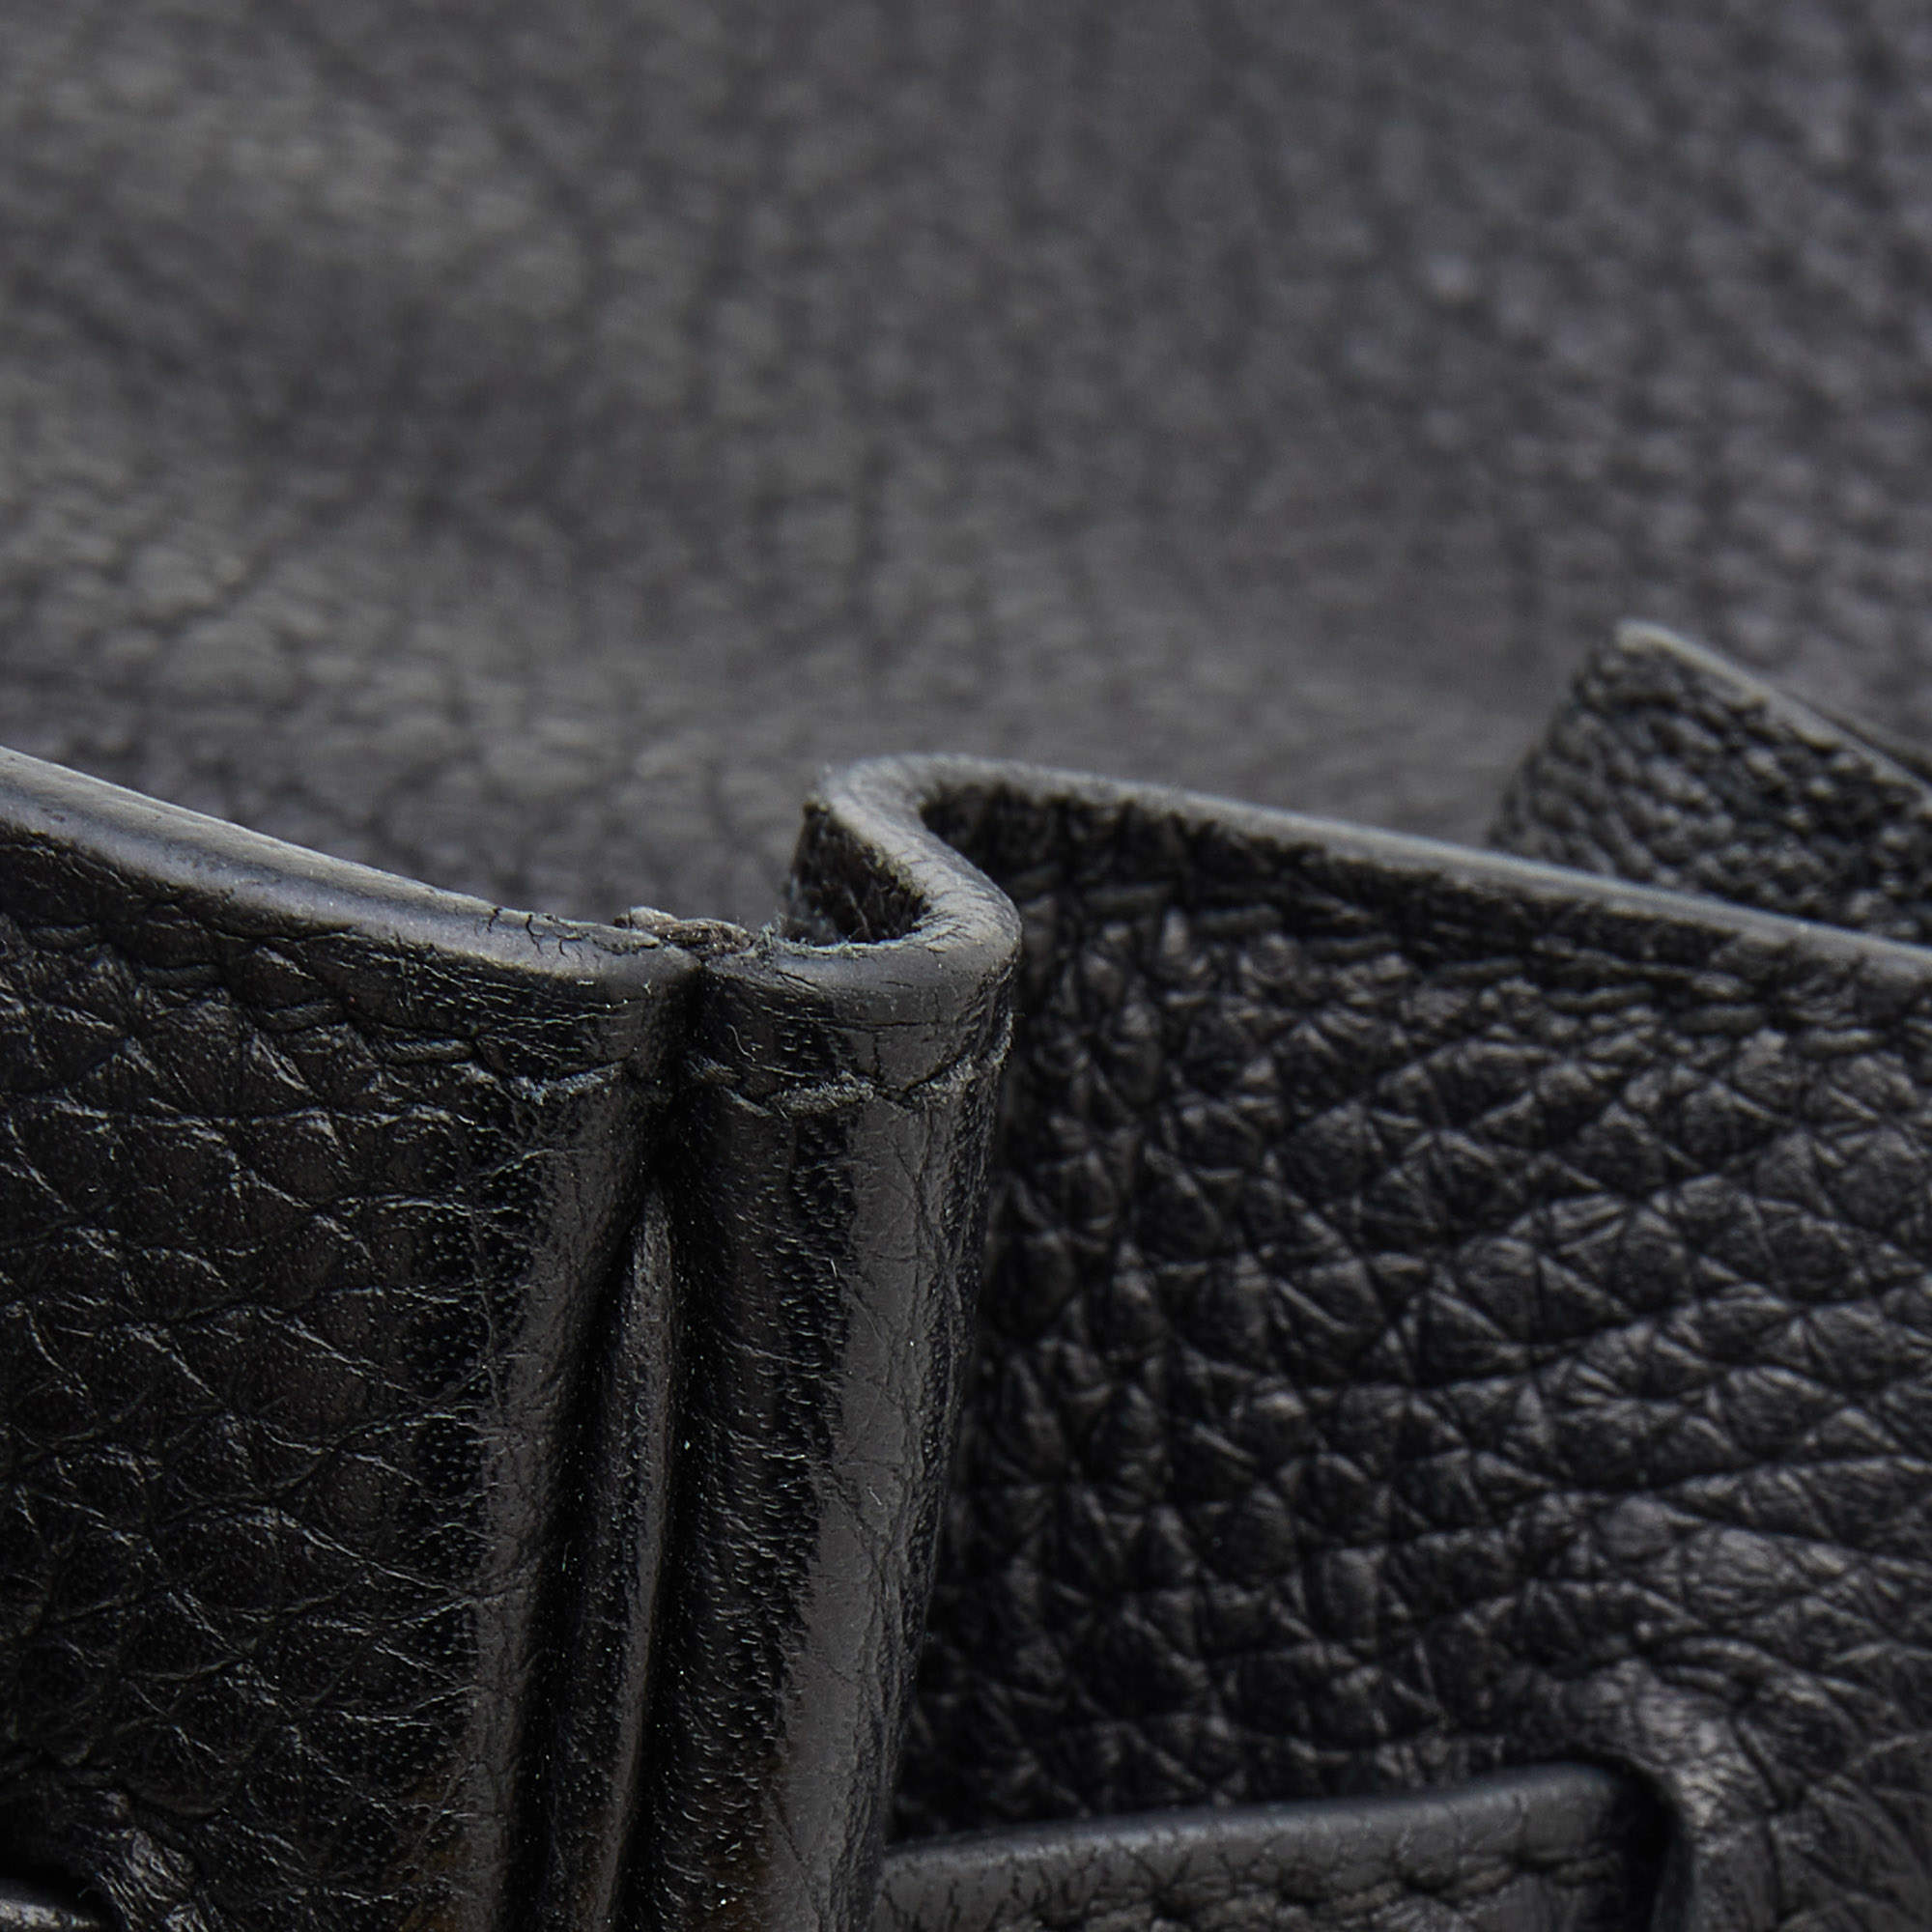 Hermès Kelly 40 Retournee Noir Fjord Leather Black